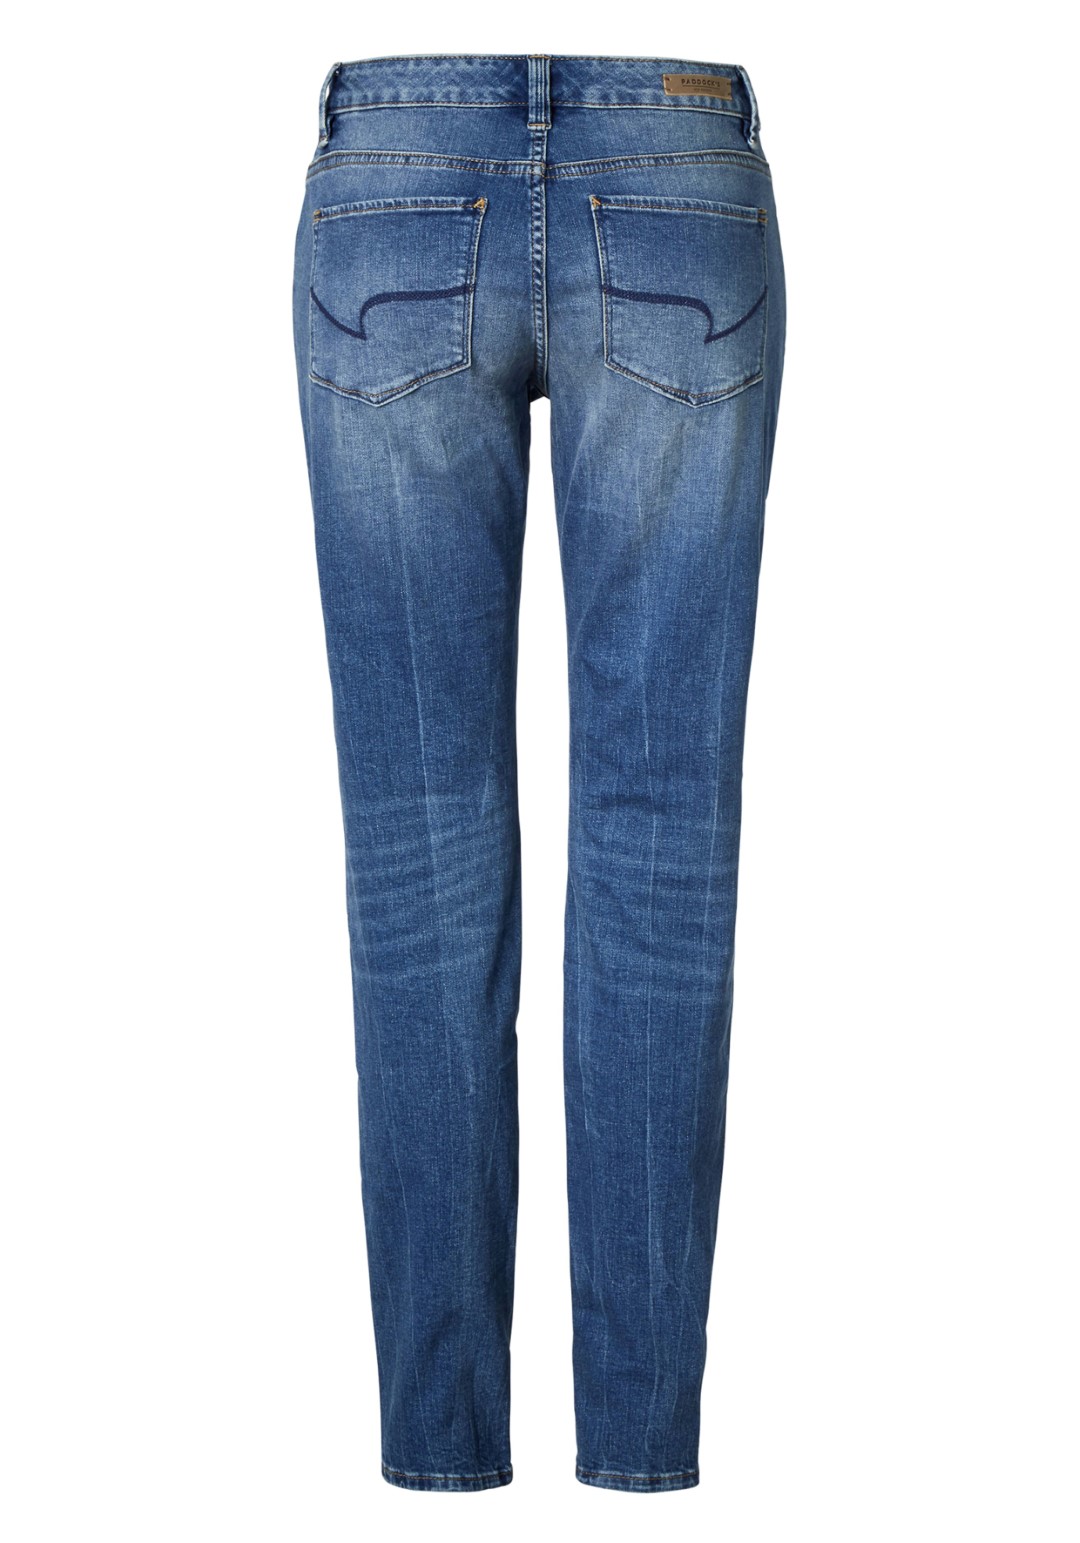 604104918000-5918_2_paddocks-jeans-juna-low-rise-tapered-leg.jpg